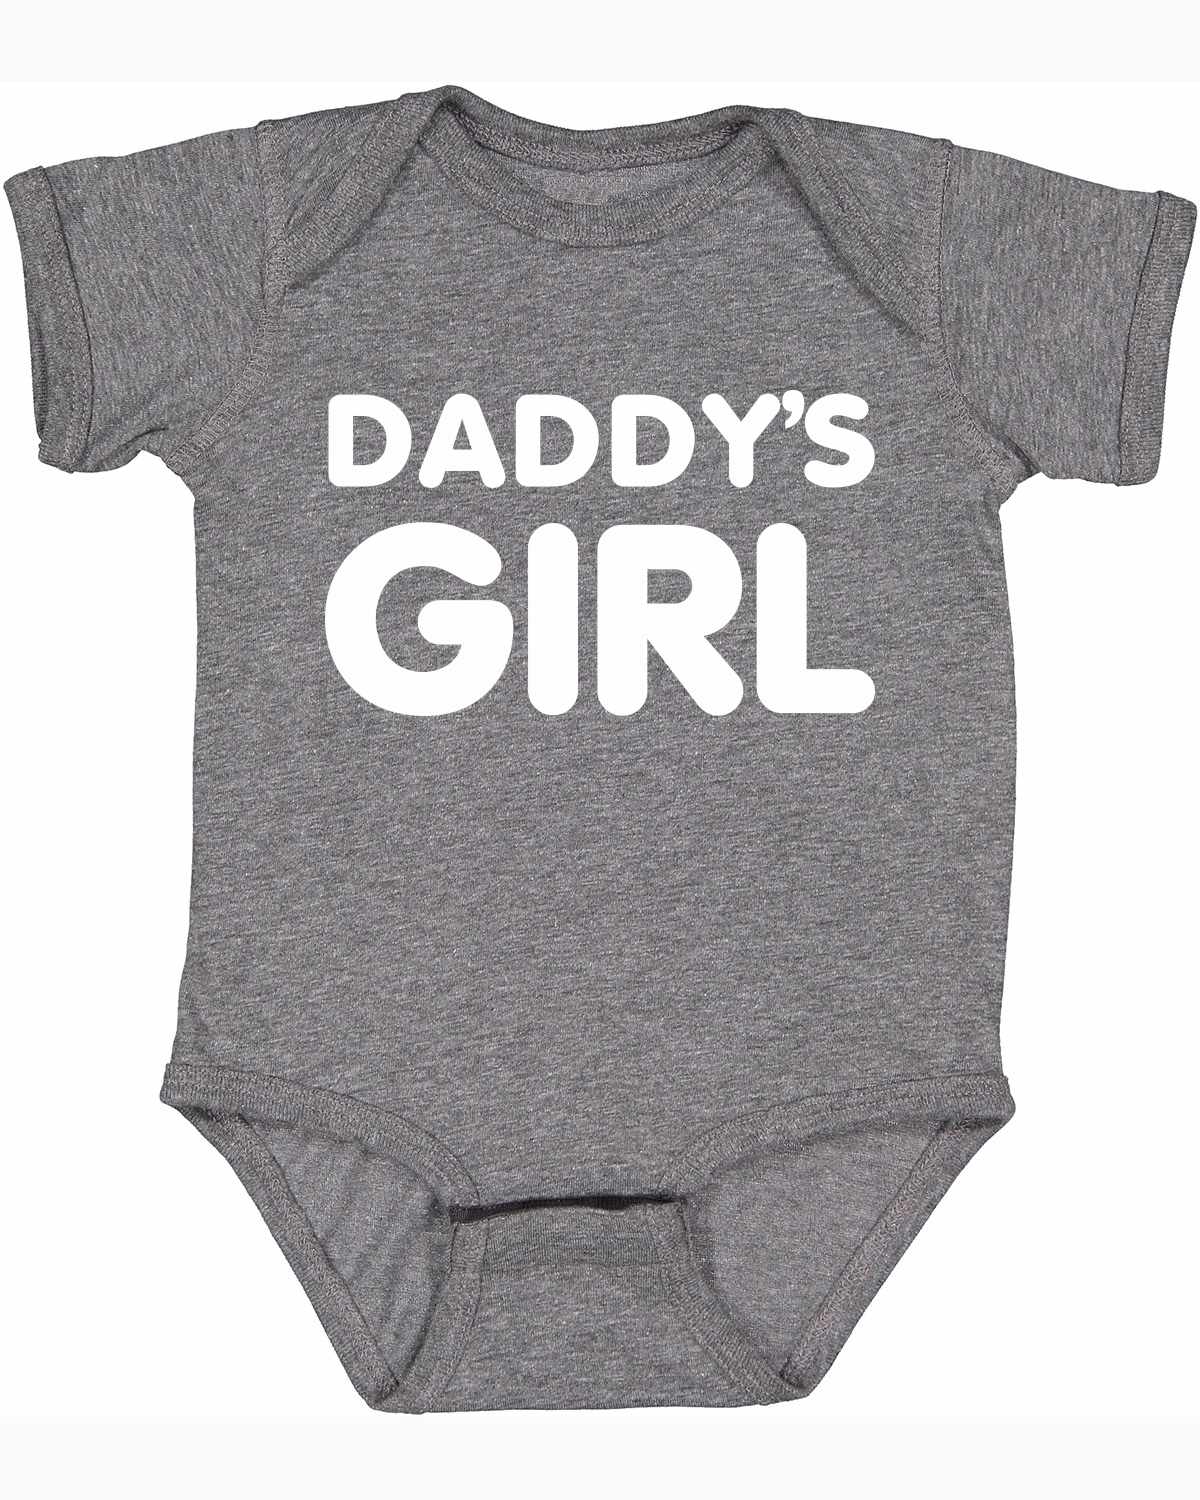 Daddy's Girl on Infant BodySuit (#1218-10)